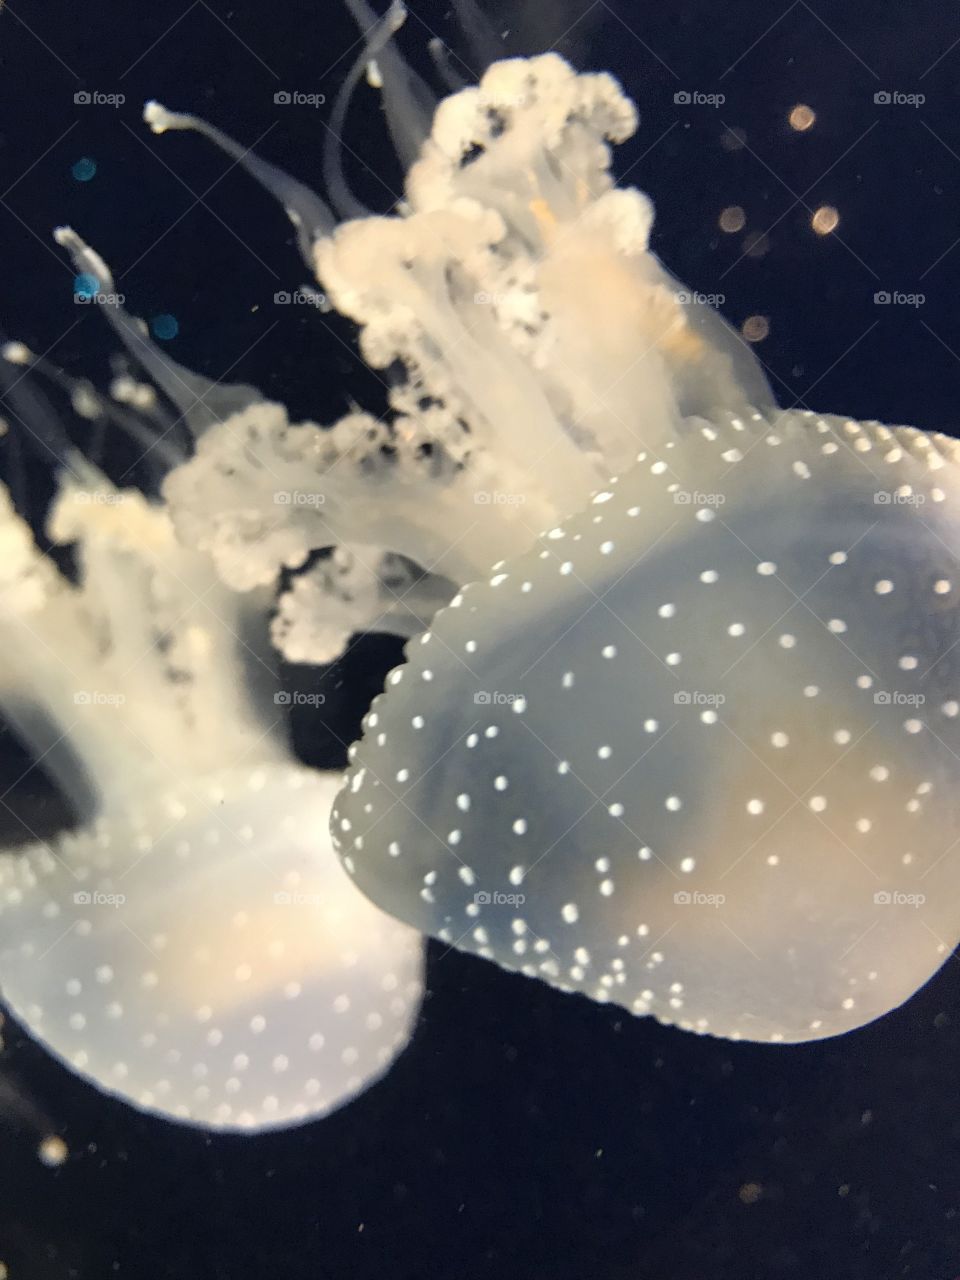 Jellyfish appearance 